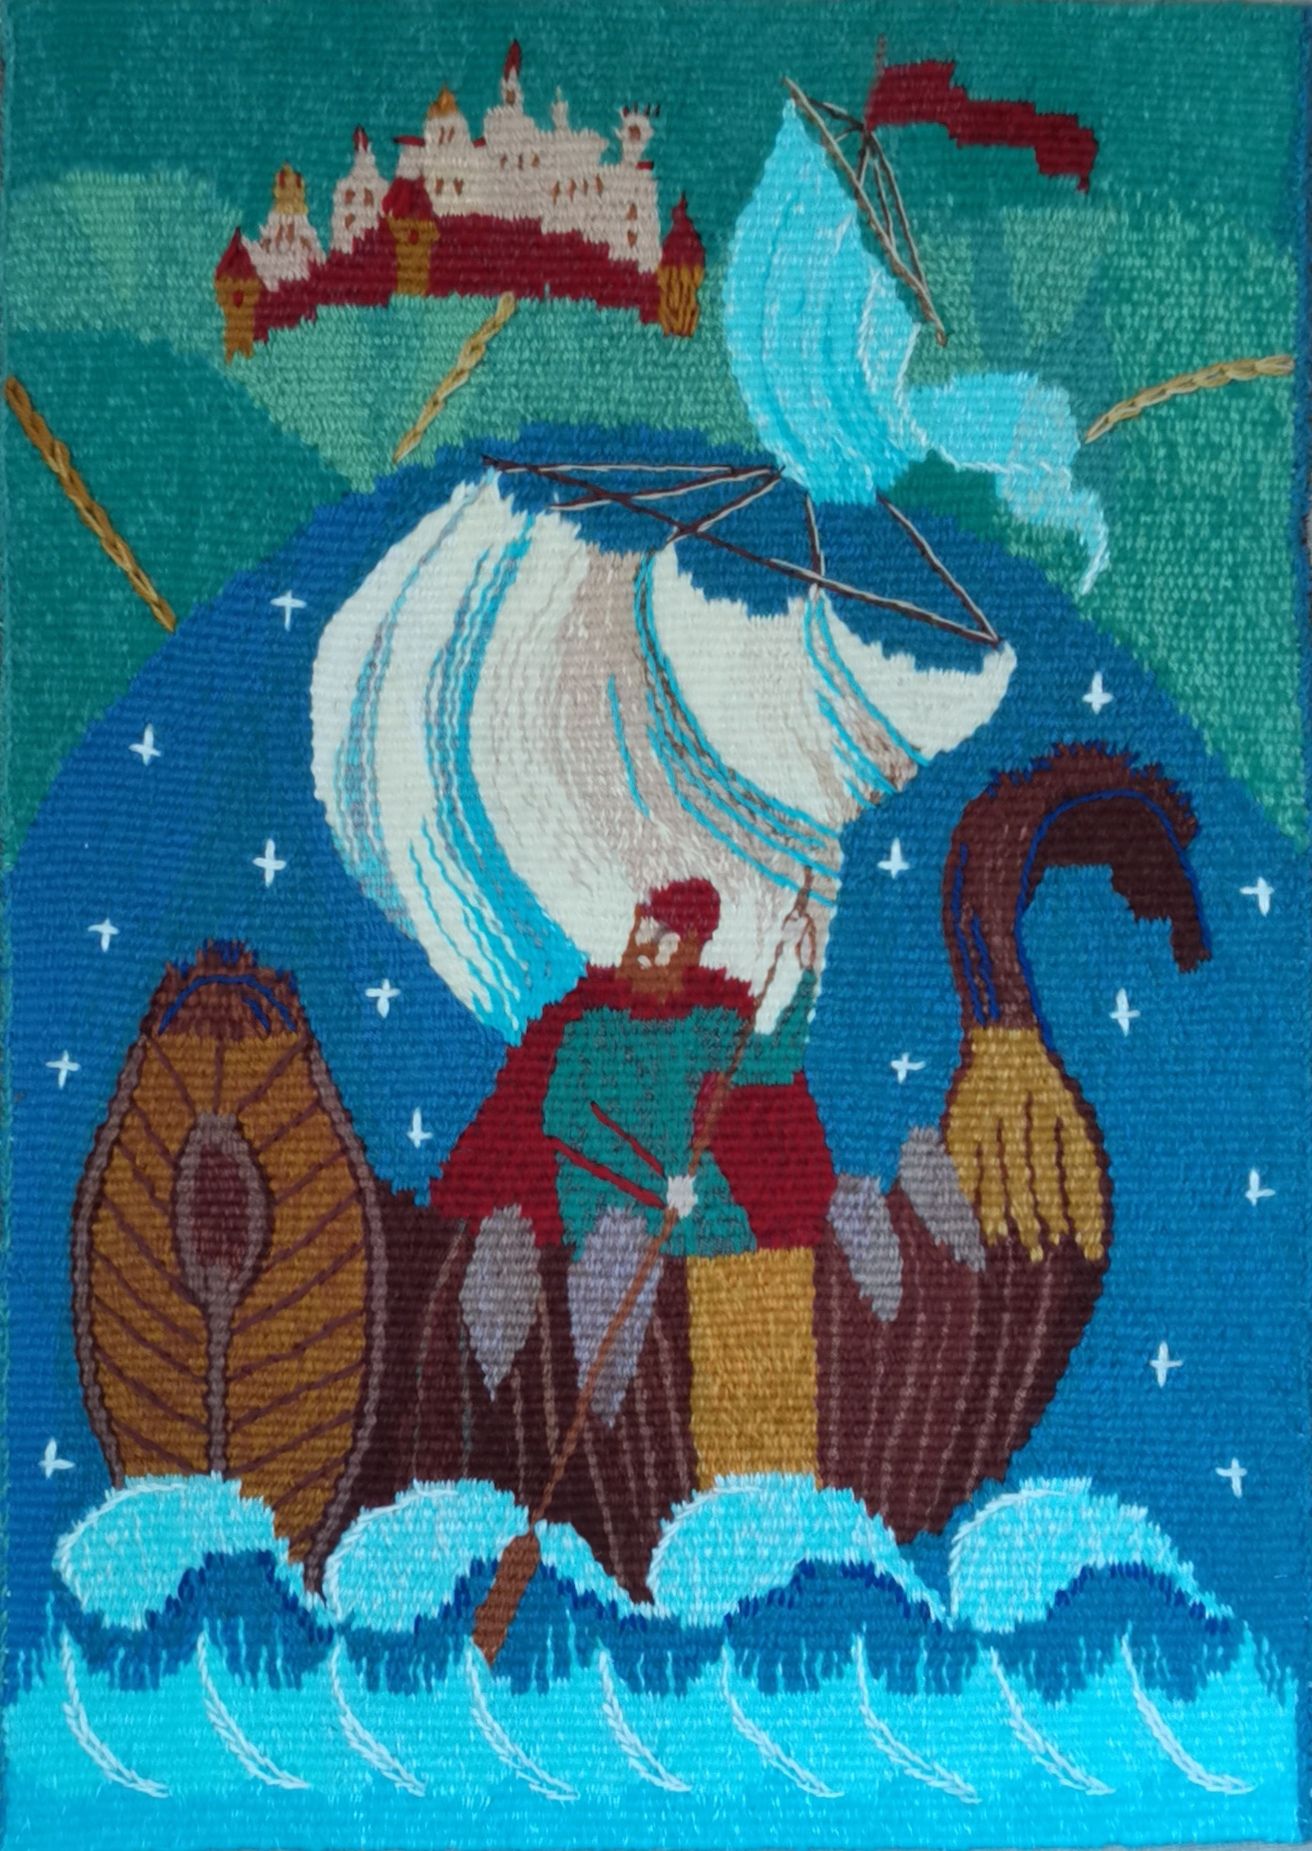 Регина Буглеева (Вышивка - 
                  40 x 60 см) Мимо острова Буяна, К царству славного Салтана